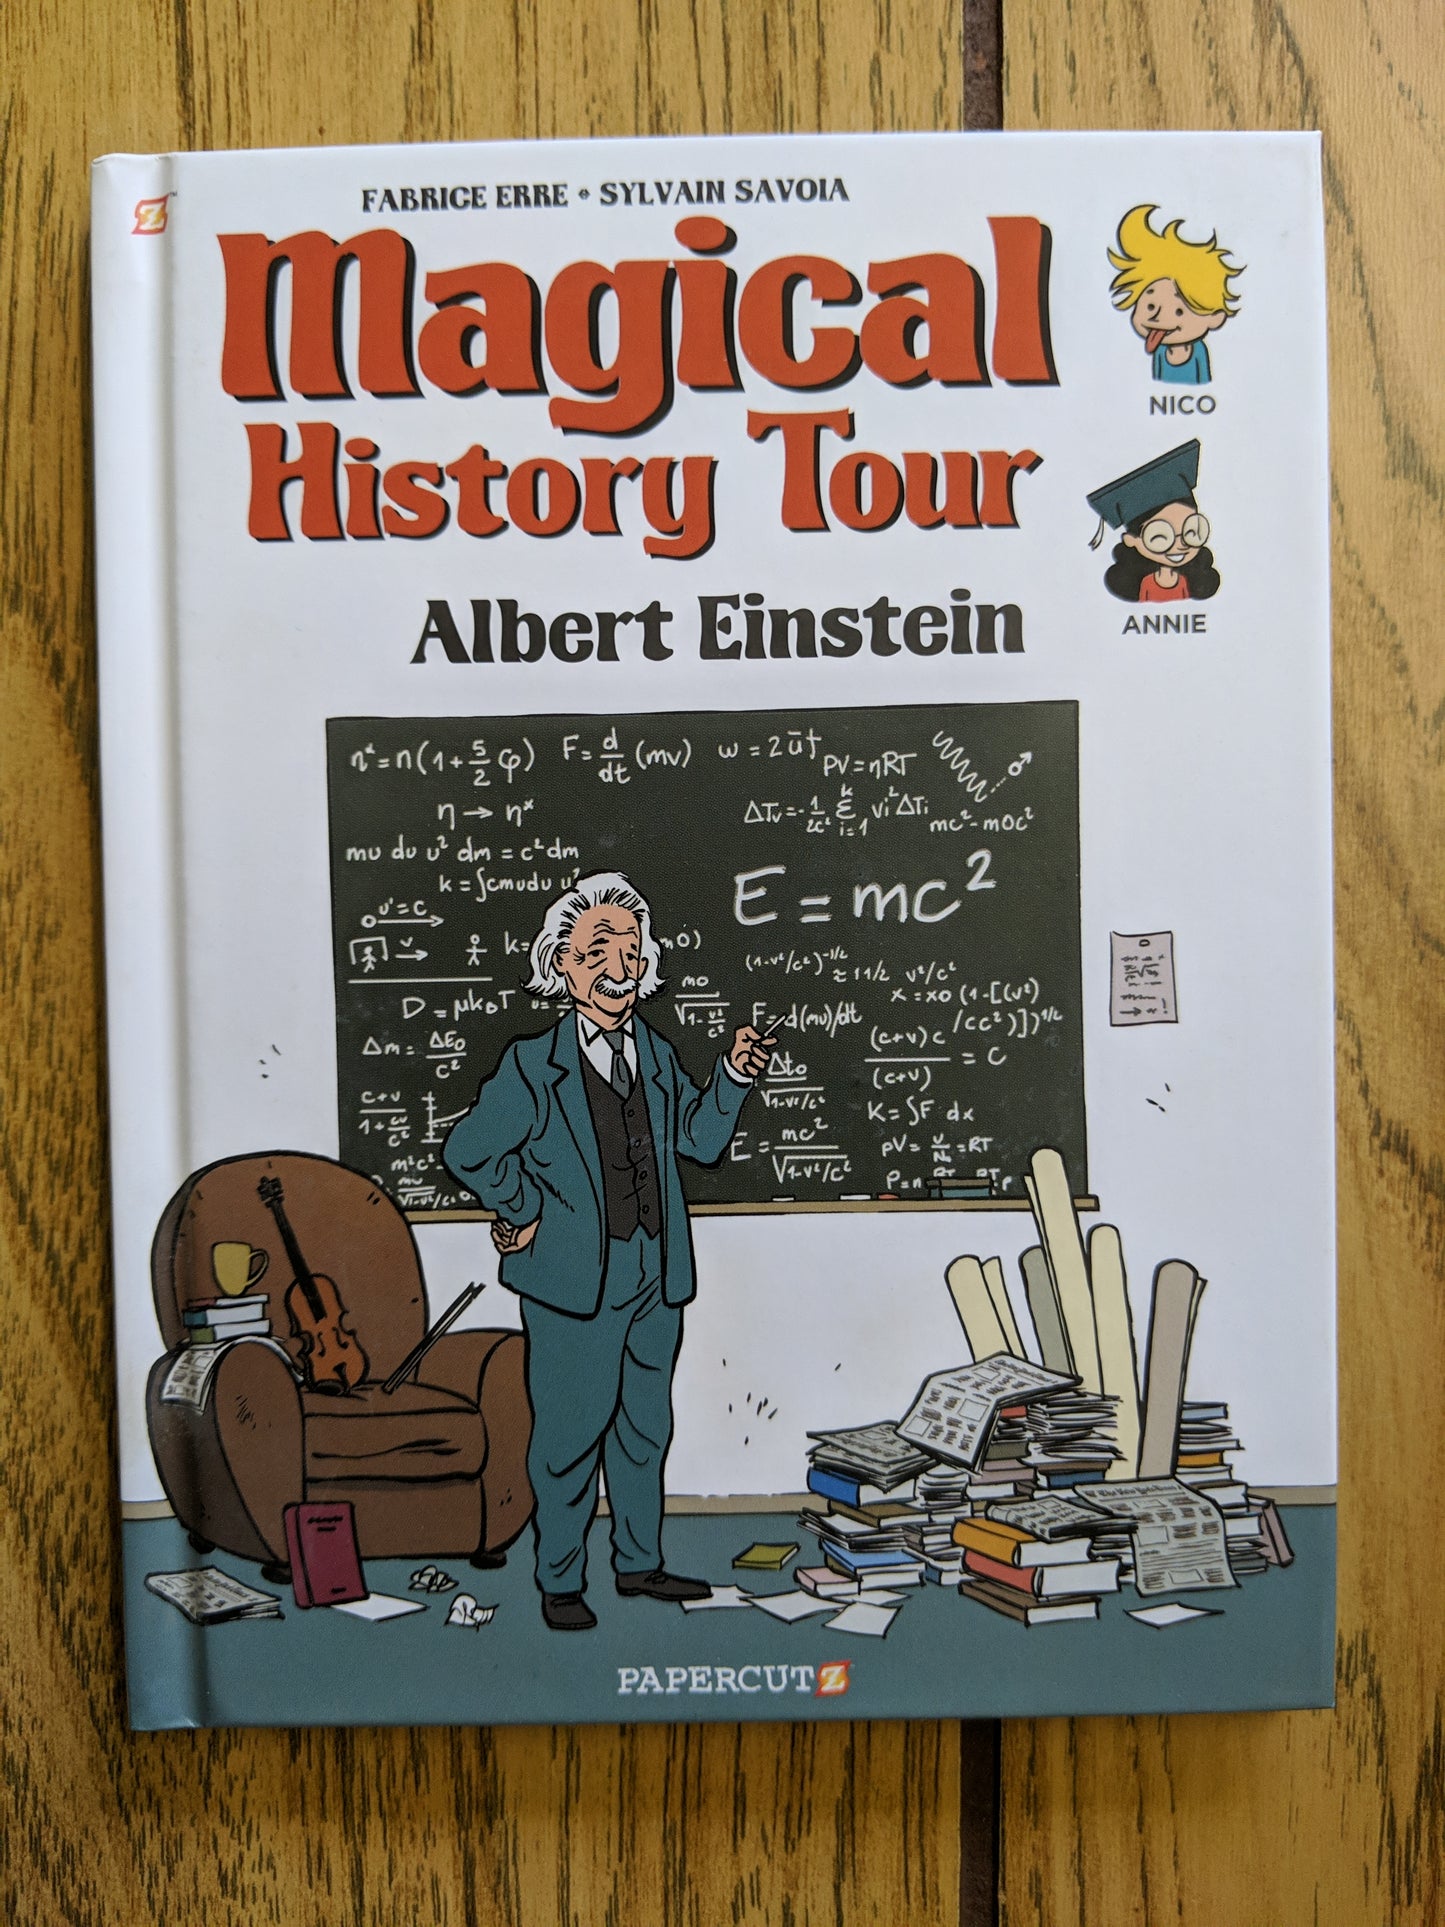 Magical History Tour #6: Albert Einstein